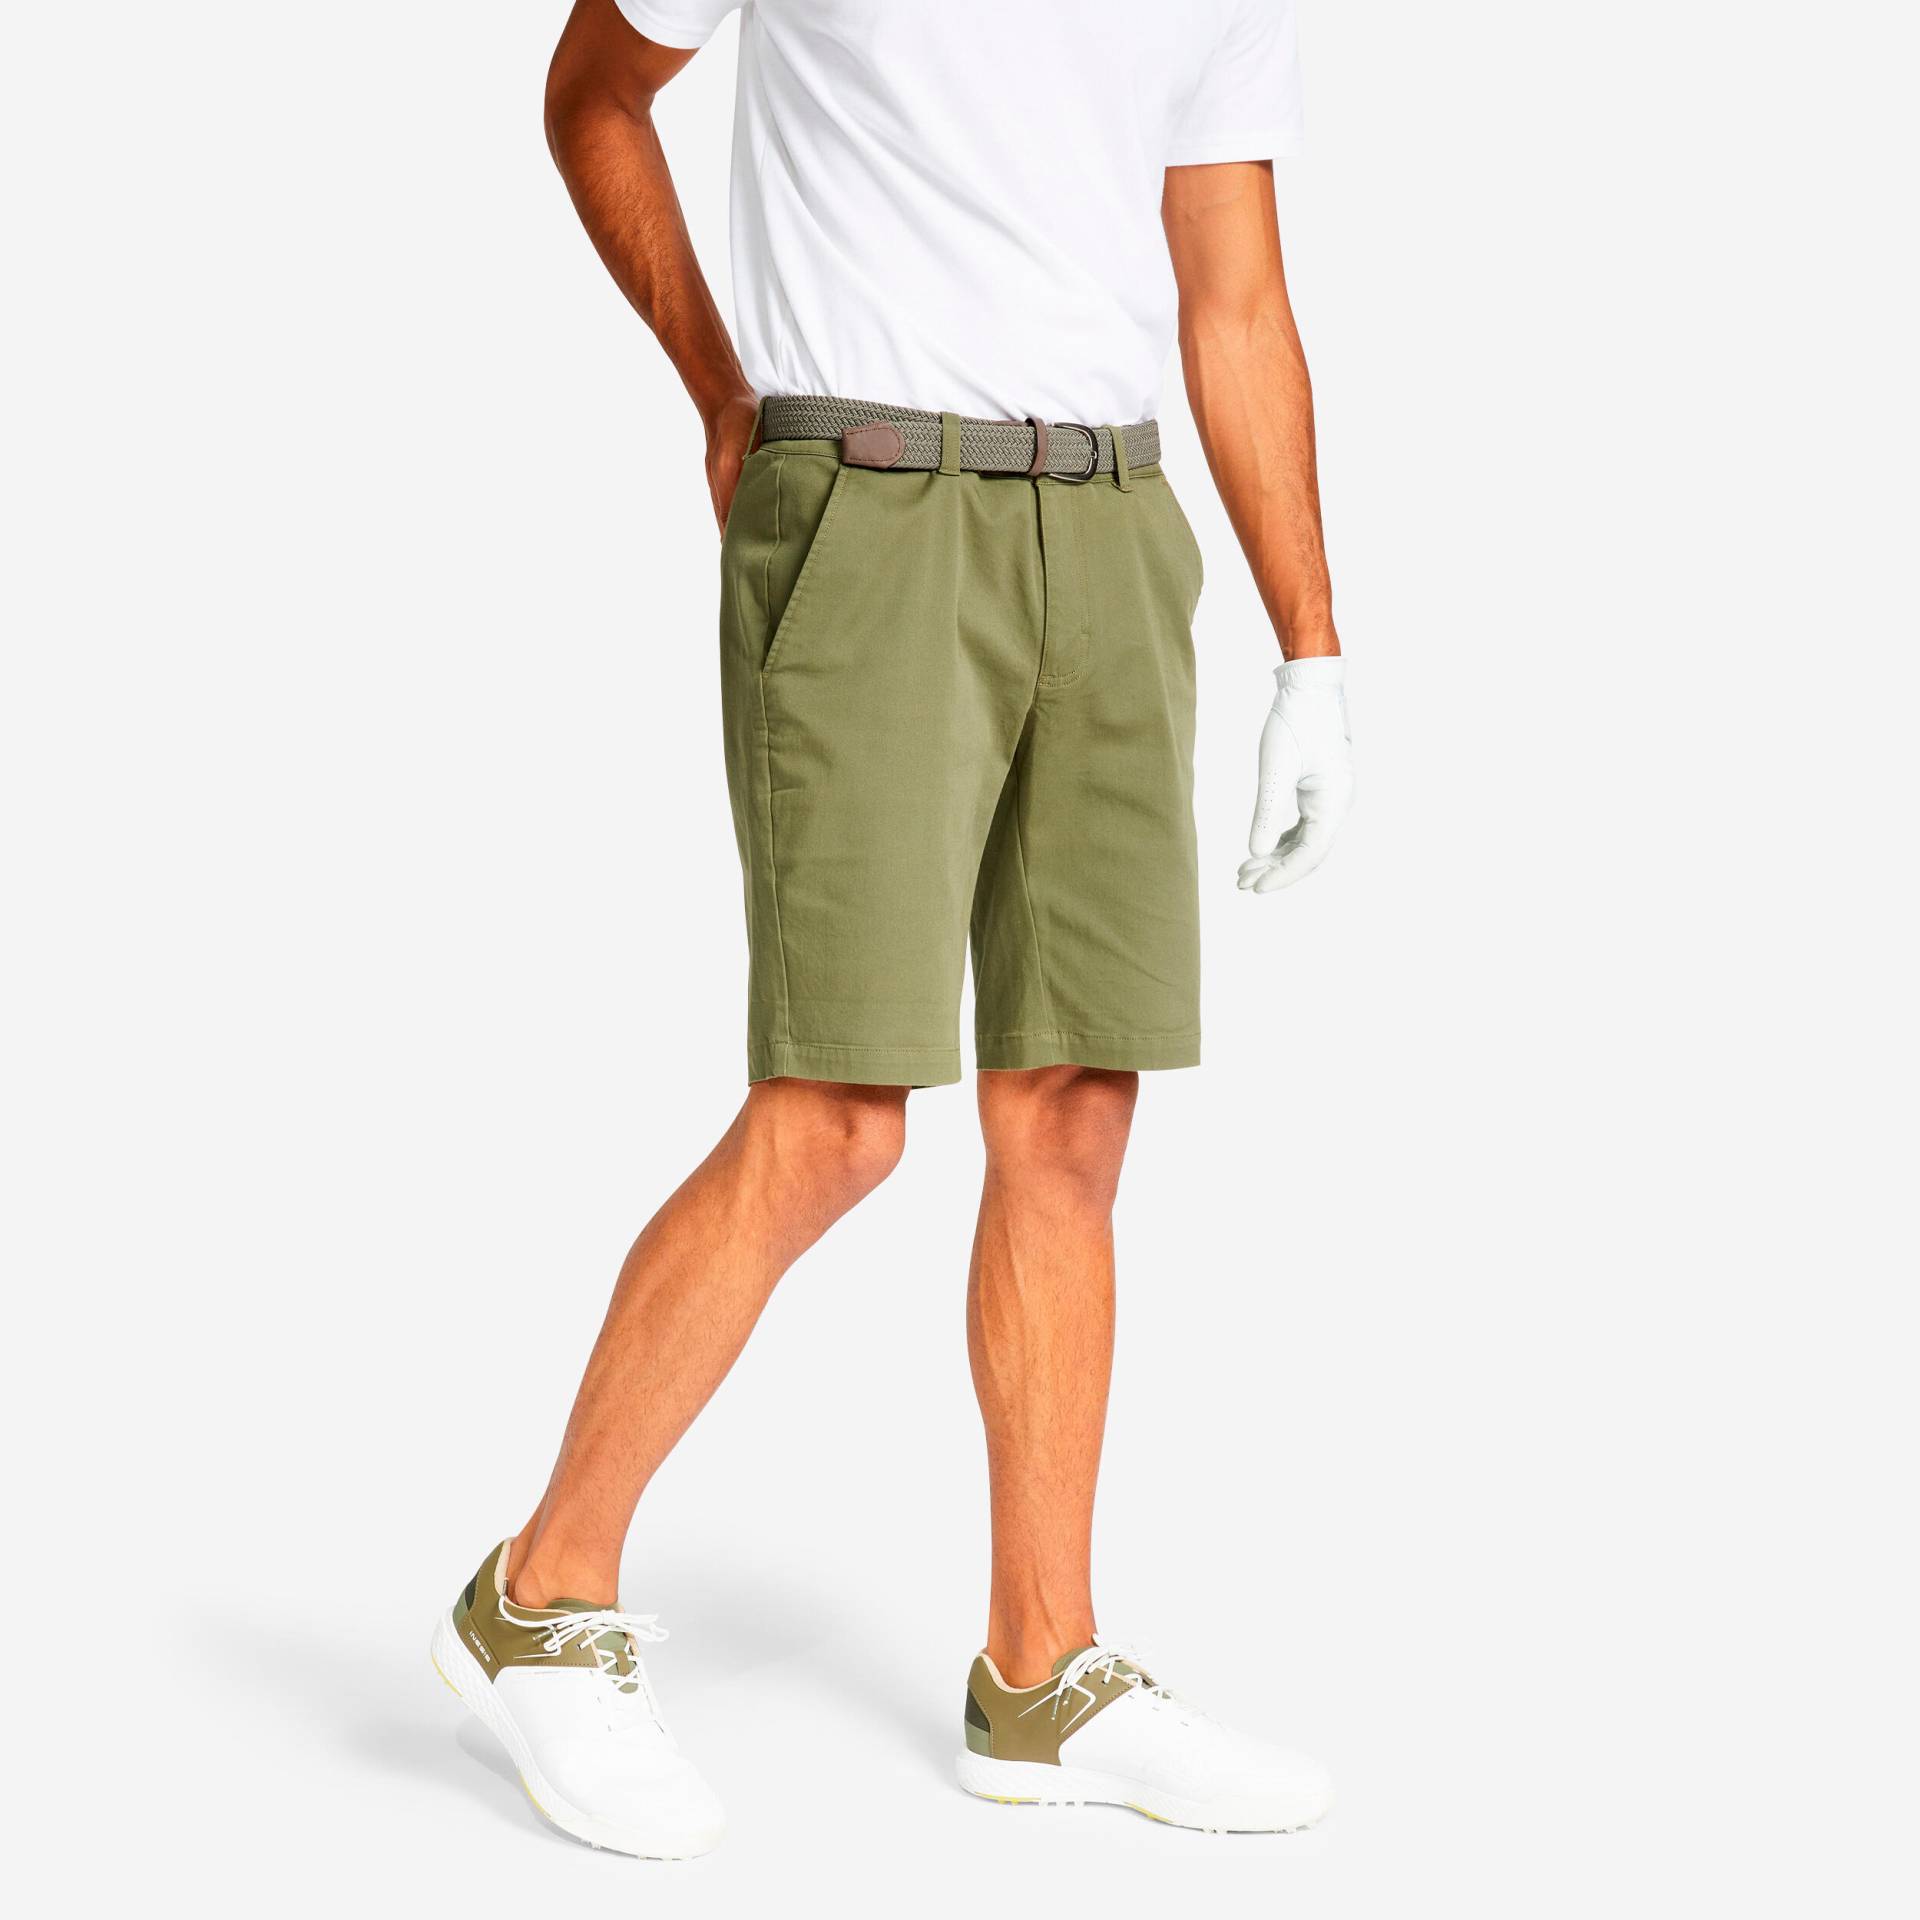 Herren Golf Shorts - MW500 khaki von INESIS